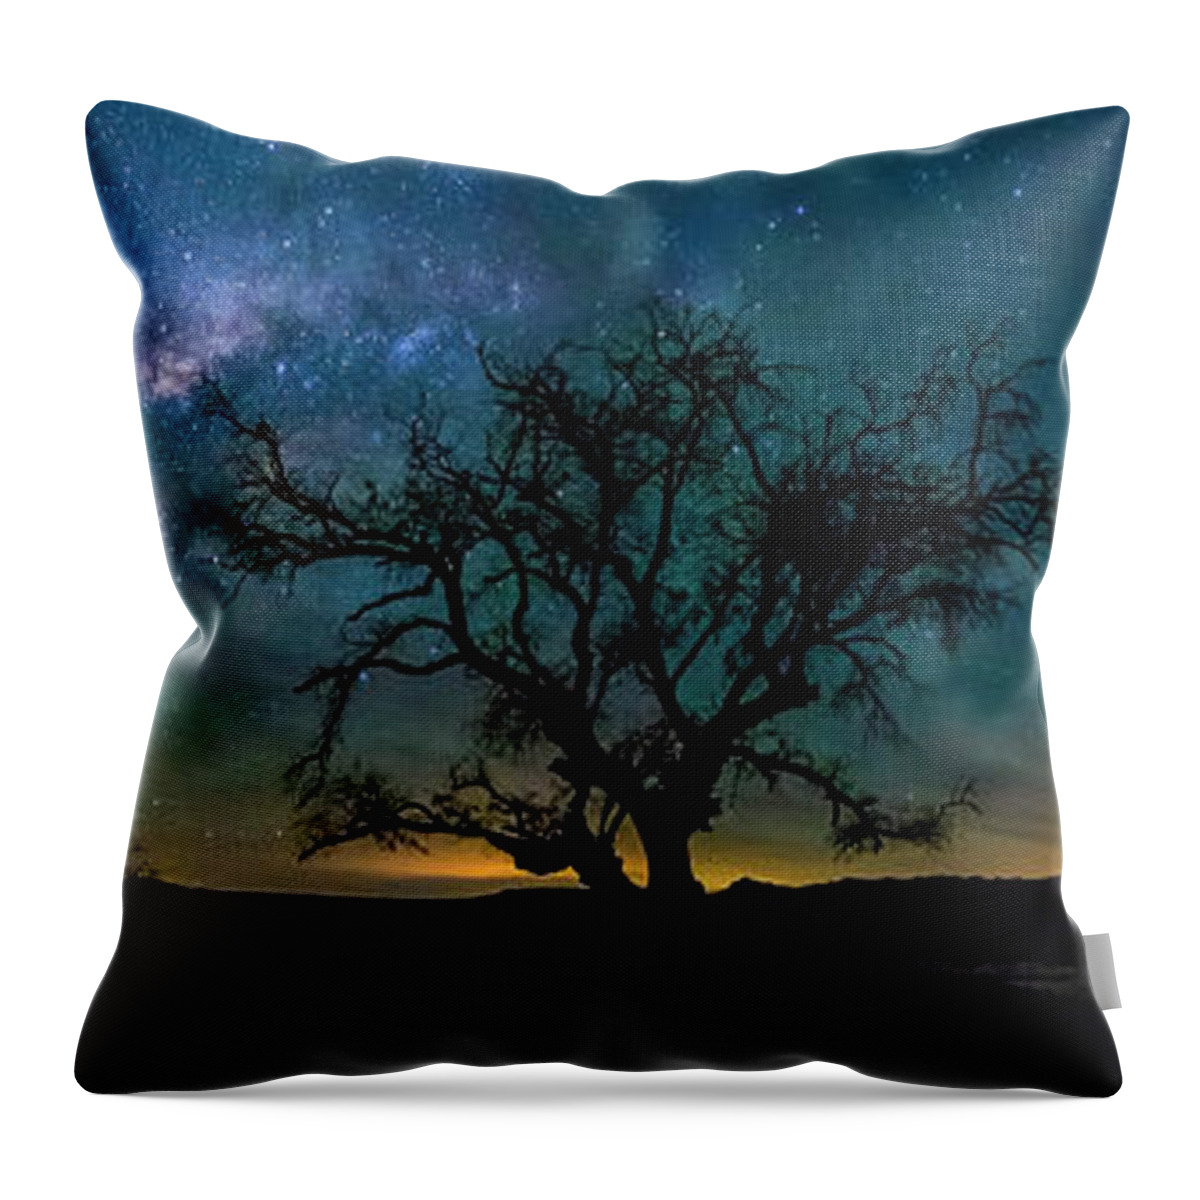 Tranquility Throw Pillow featuring the photograph Atacama Desert Night Sky by Adhemar Duro